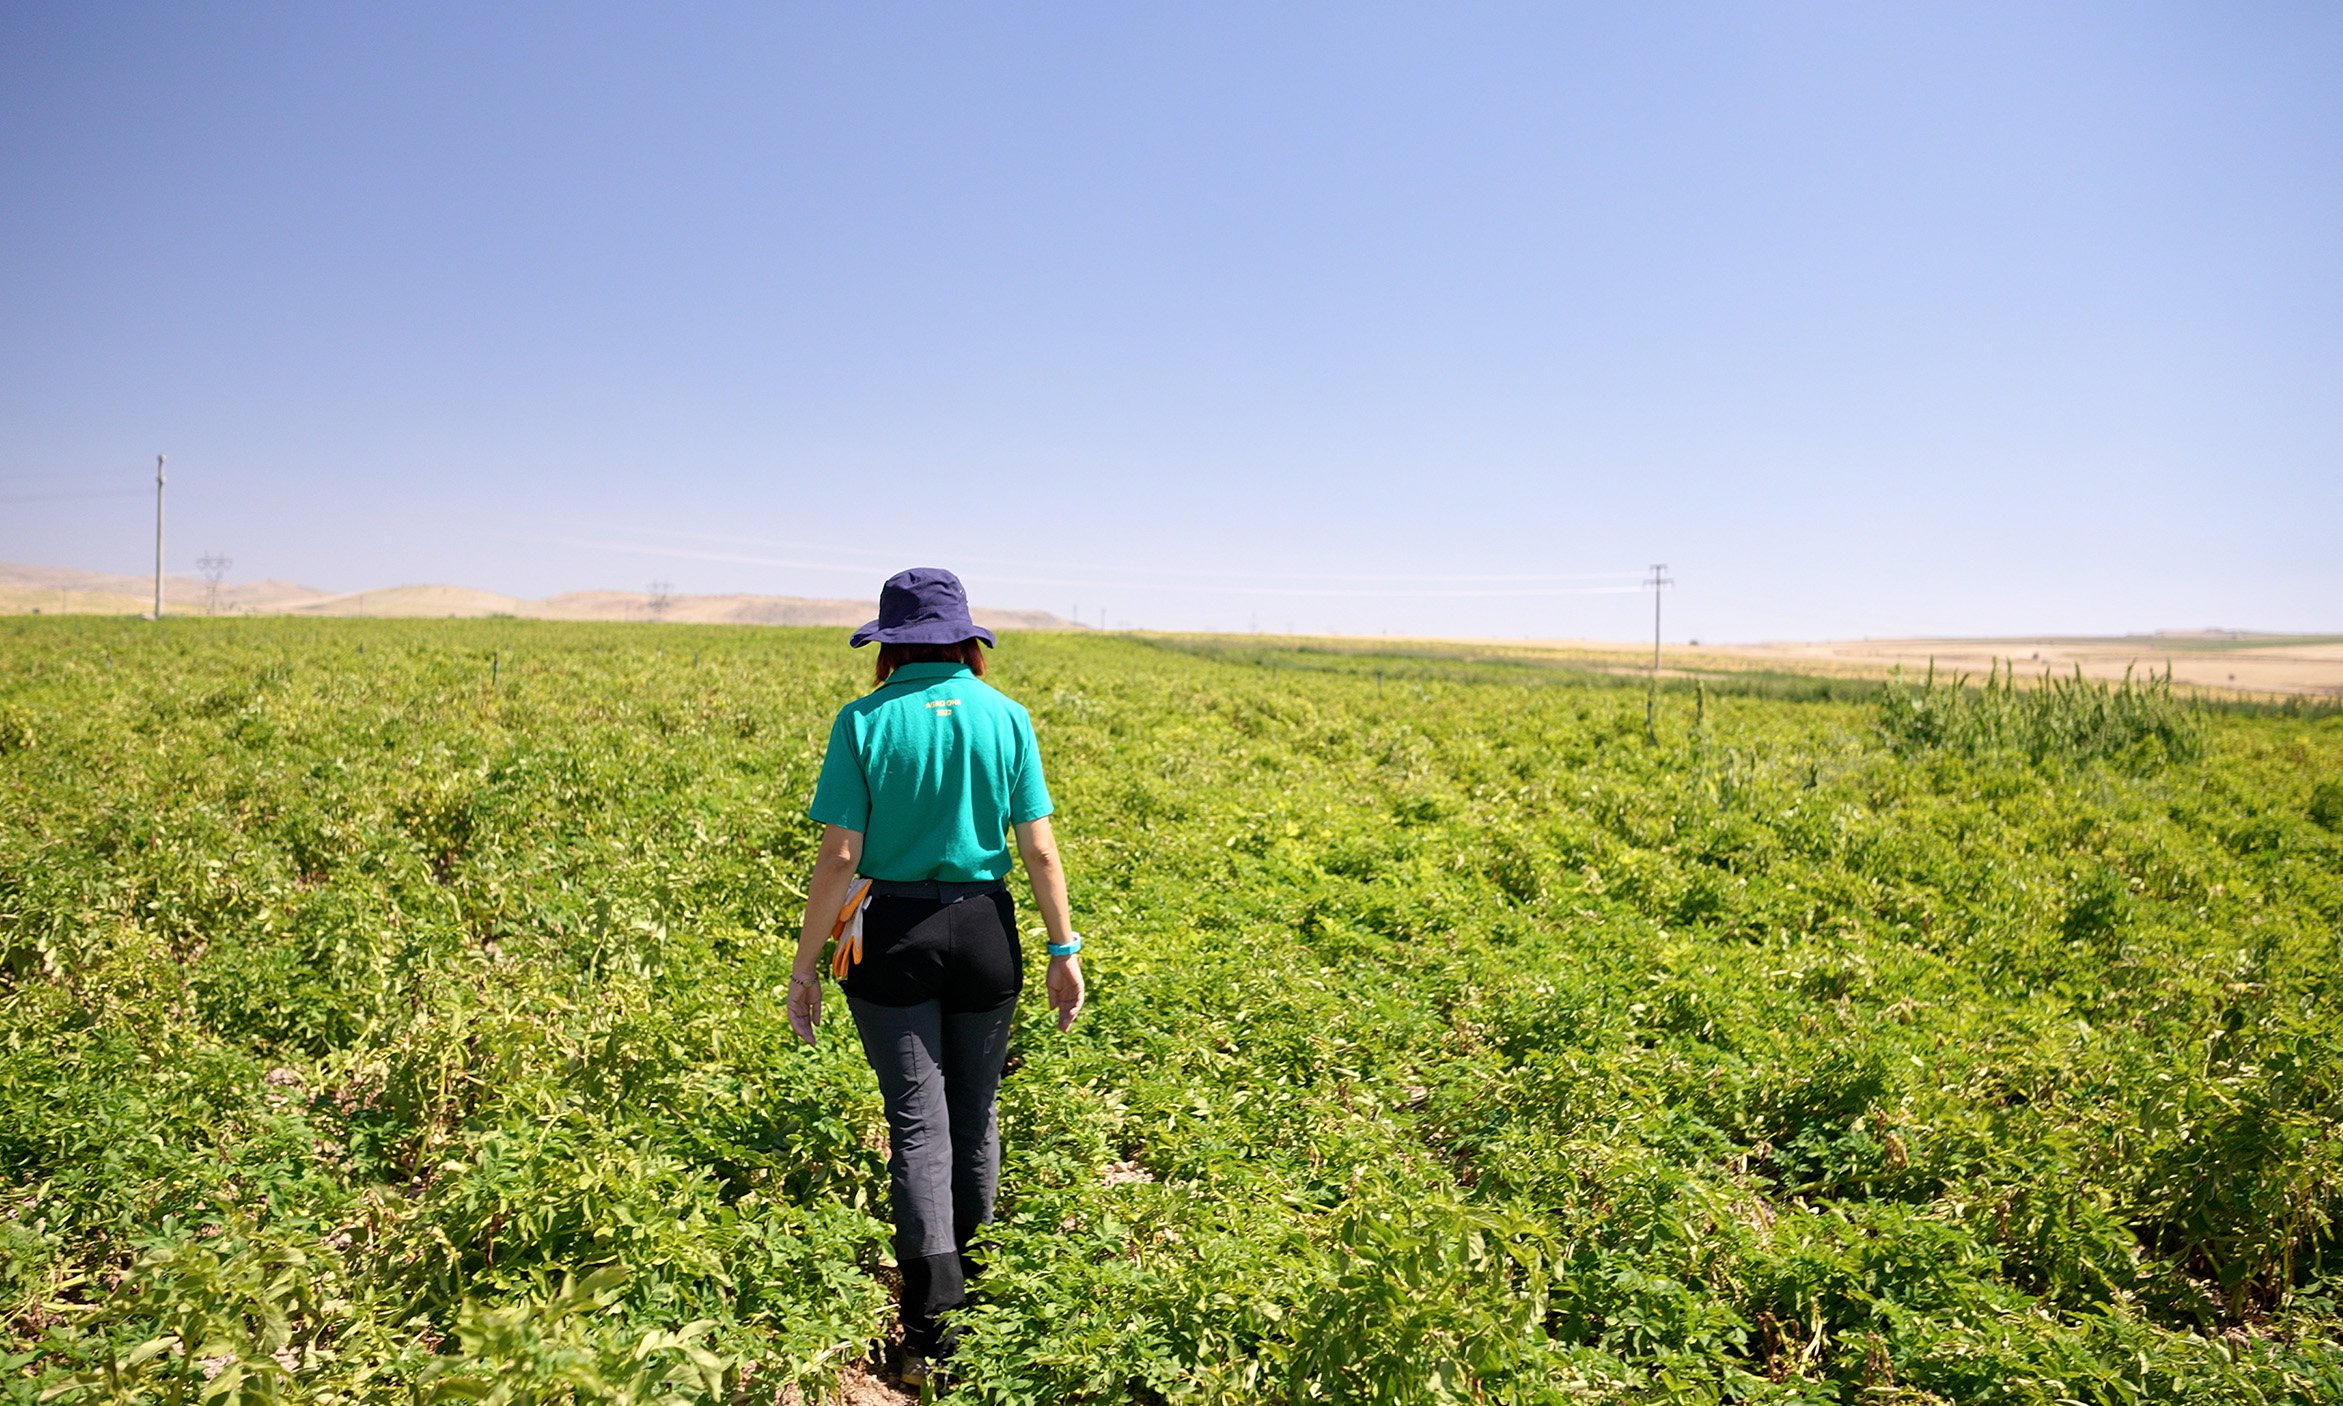 Female farmer walks through green field of crops